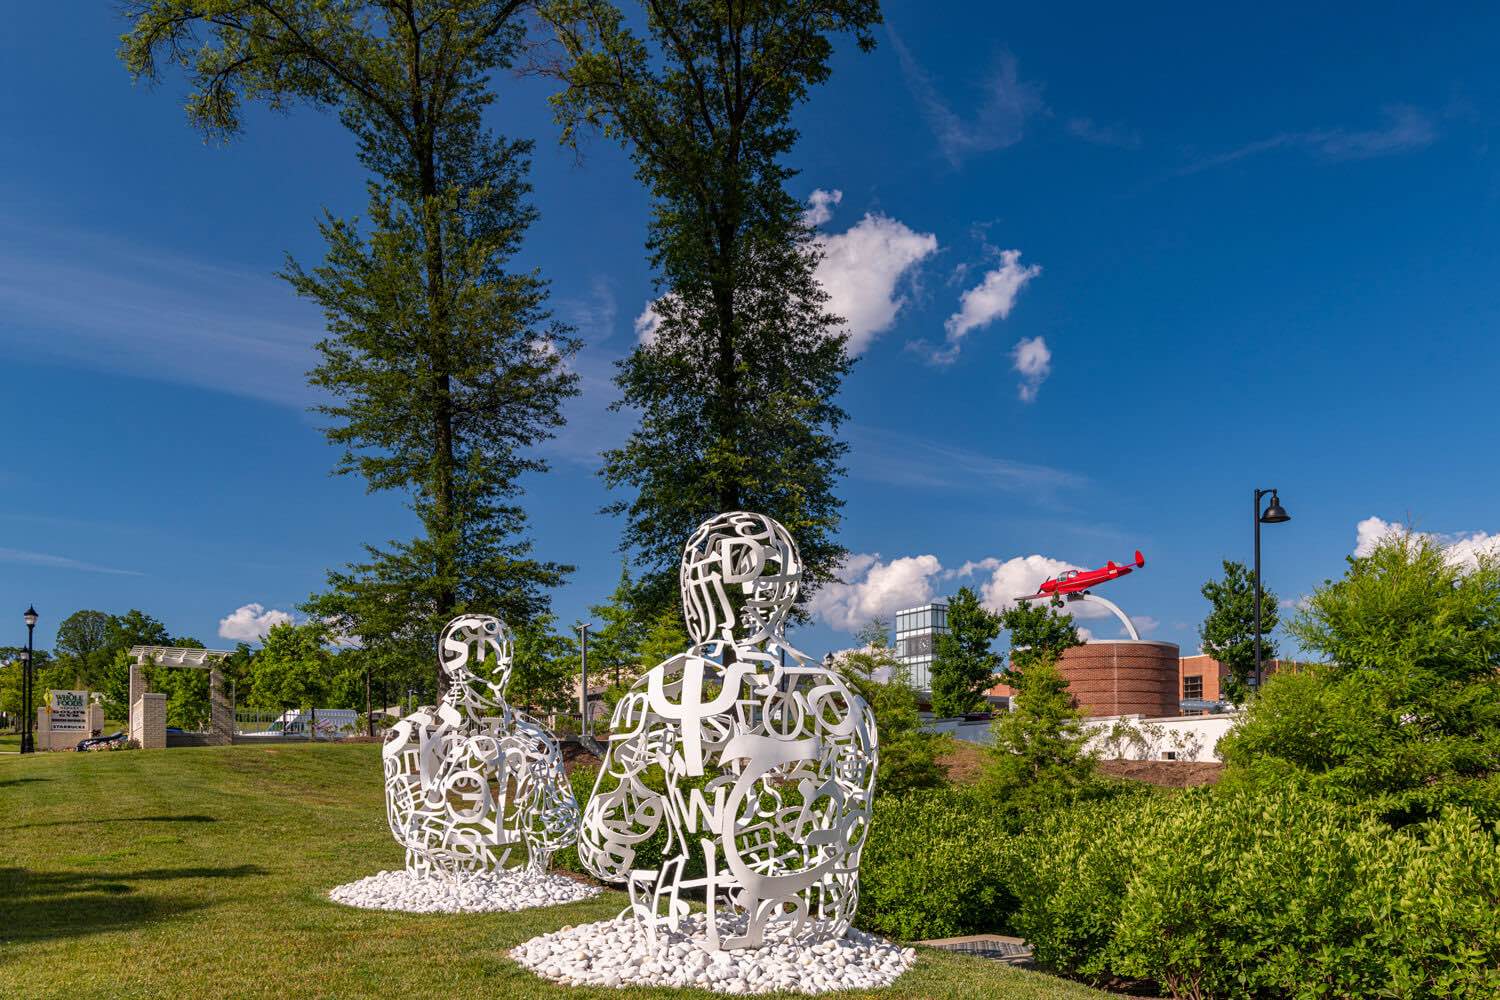 Gateway Park features sculptures by artist Jaume Plensa